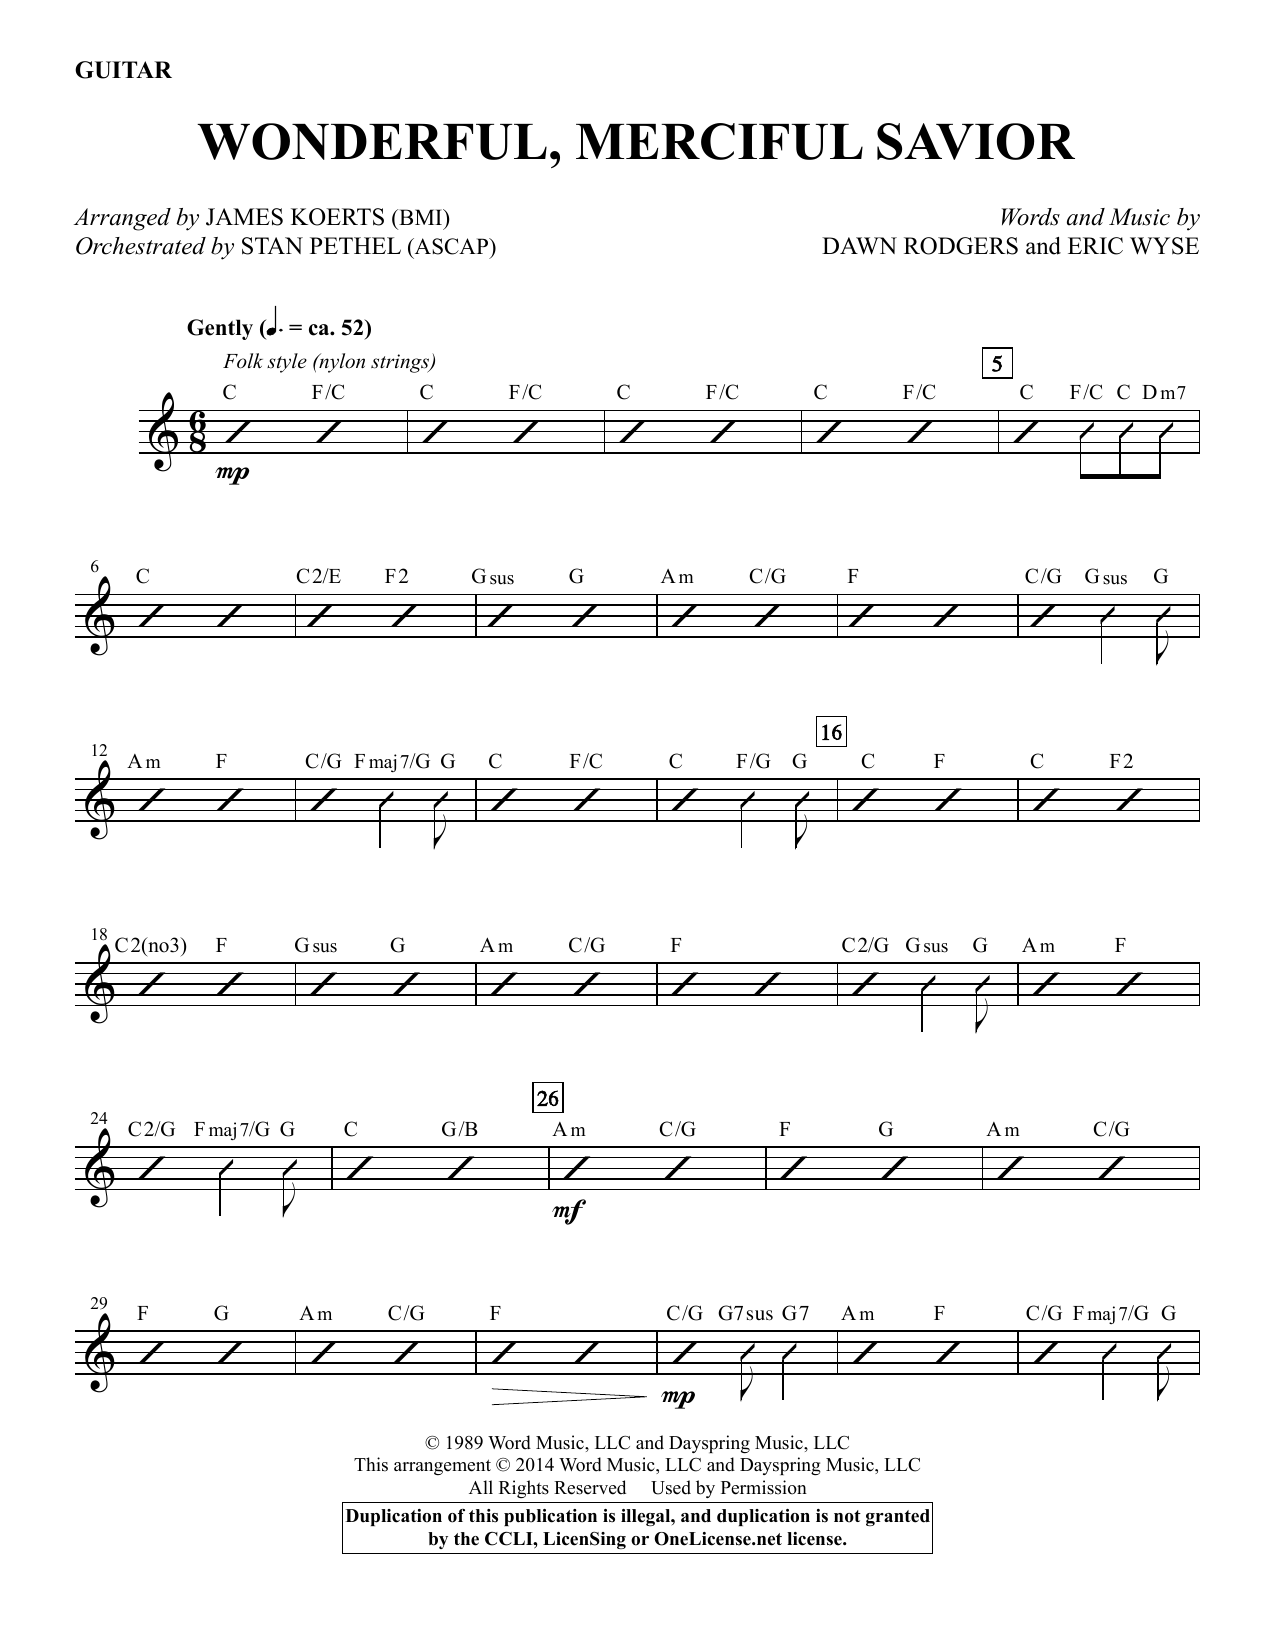 James Koerts Wonderful, Merciful Savior - Guitar sheet music notes and chords. Download Printable PDF.